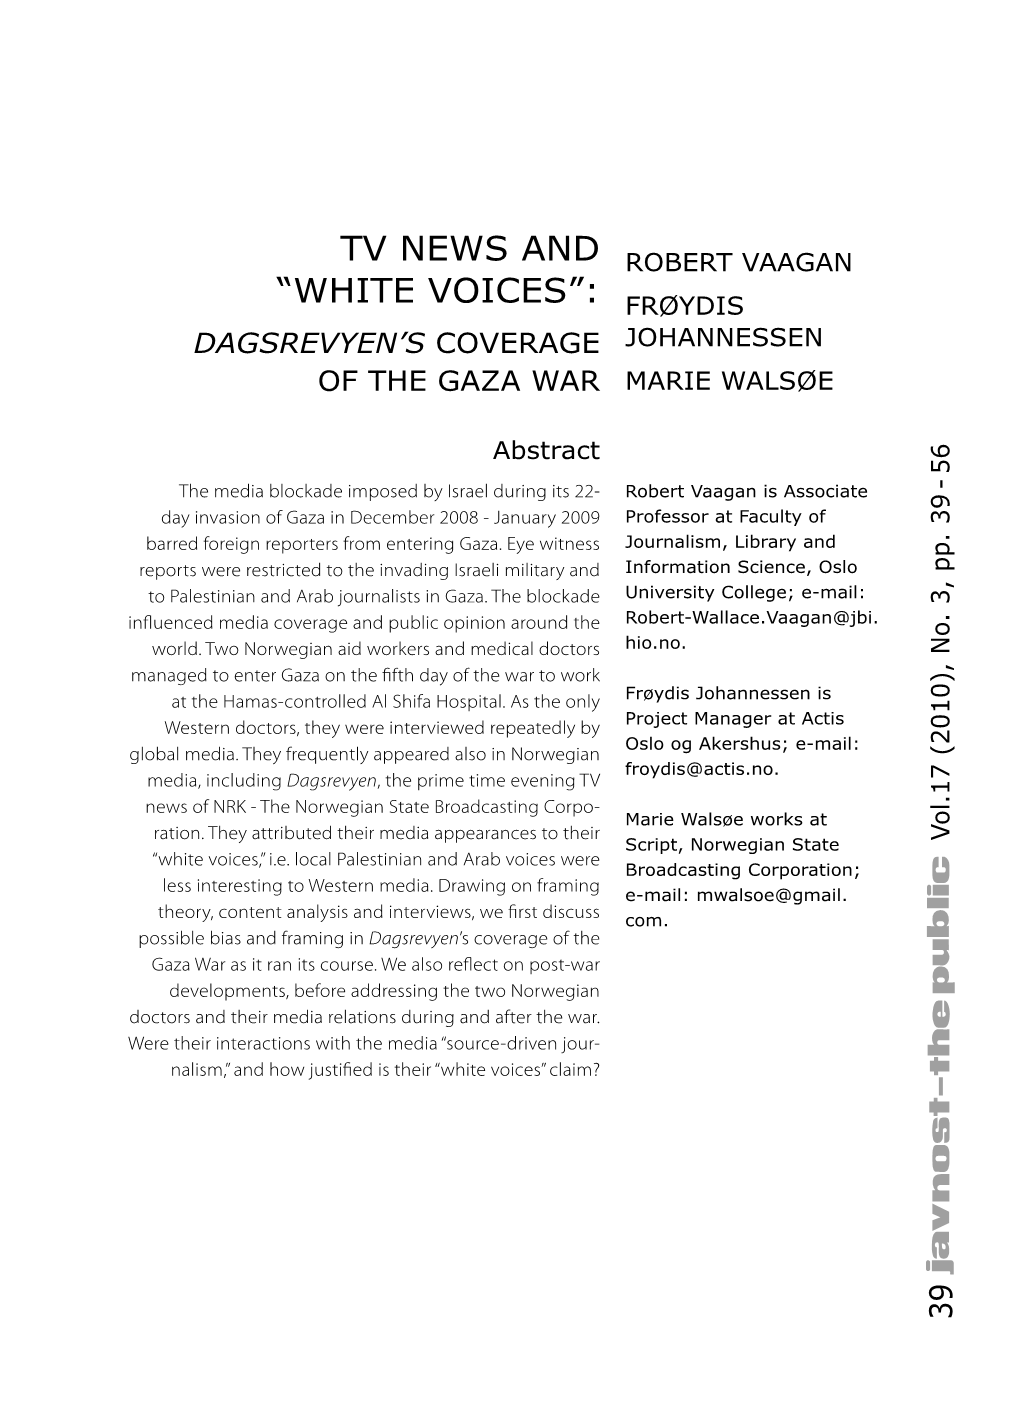 Dagsrevyens Coverage of the Gaza